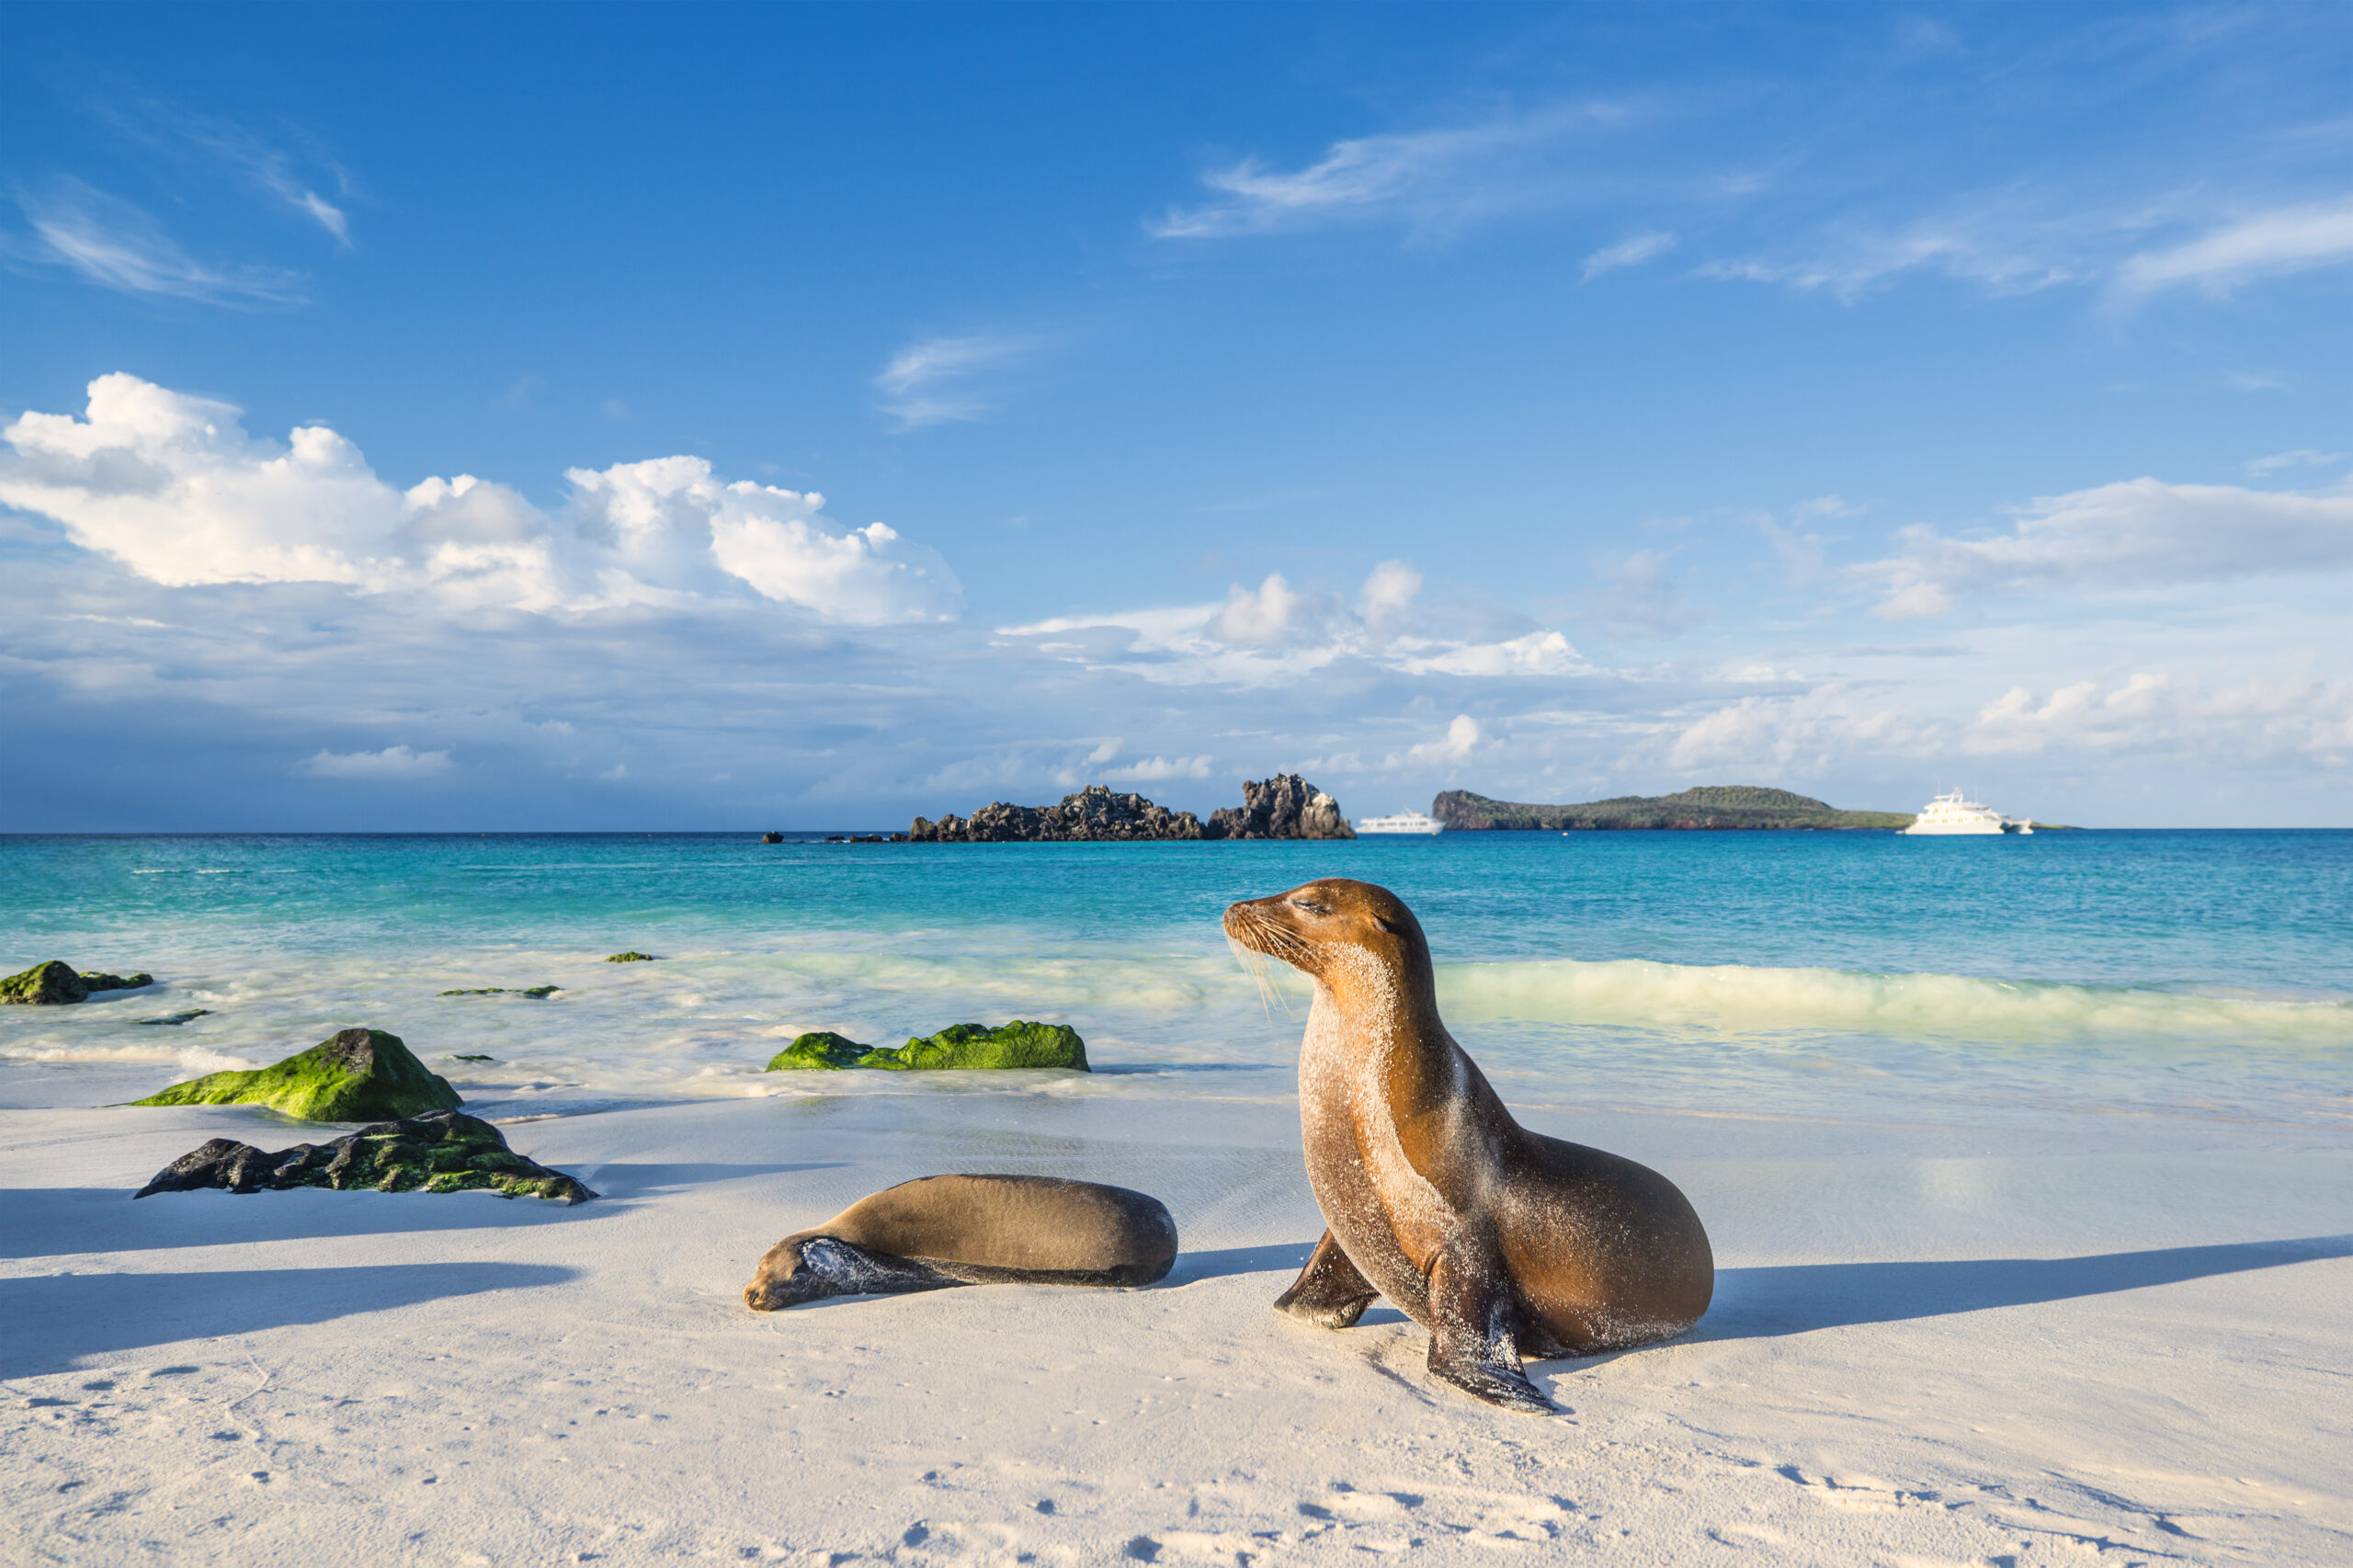 Galapagos sea lion (Zalophus wollebaeki) at the beach of Espanola island